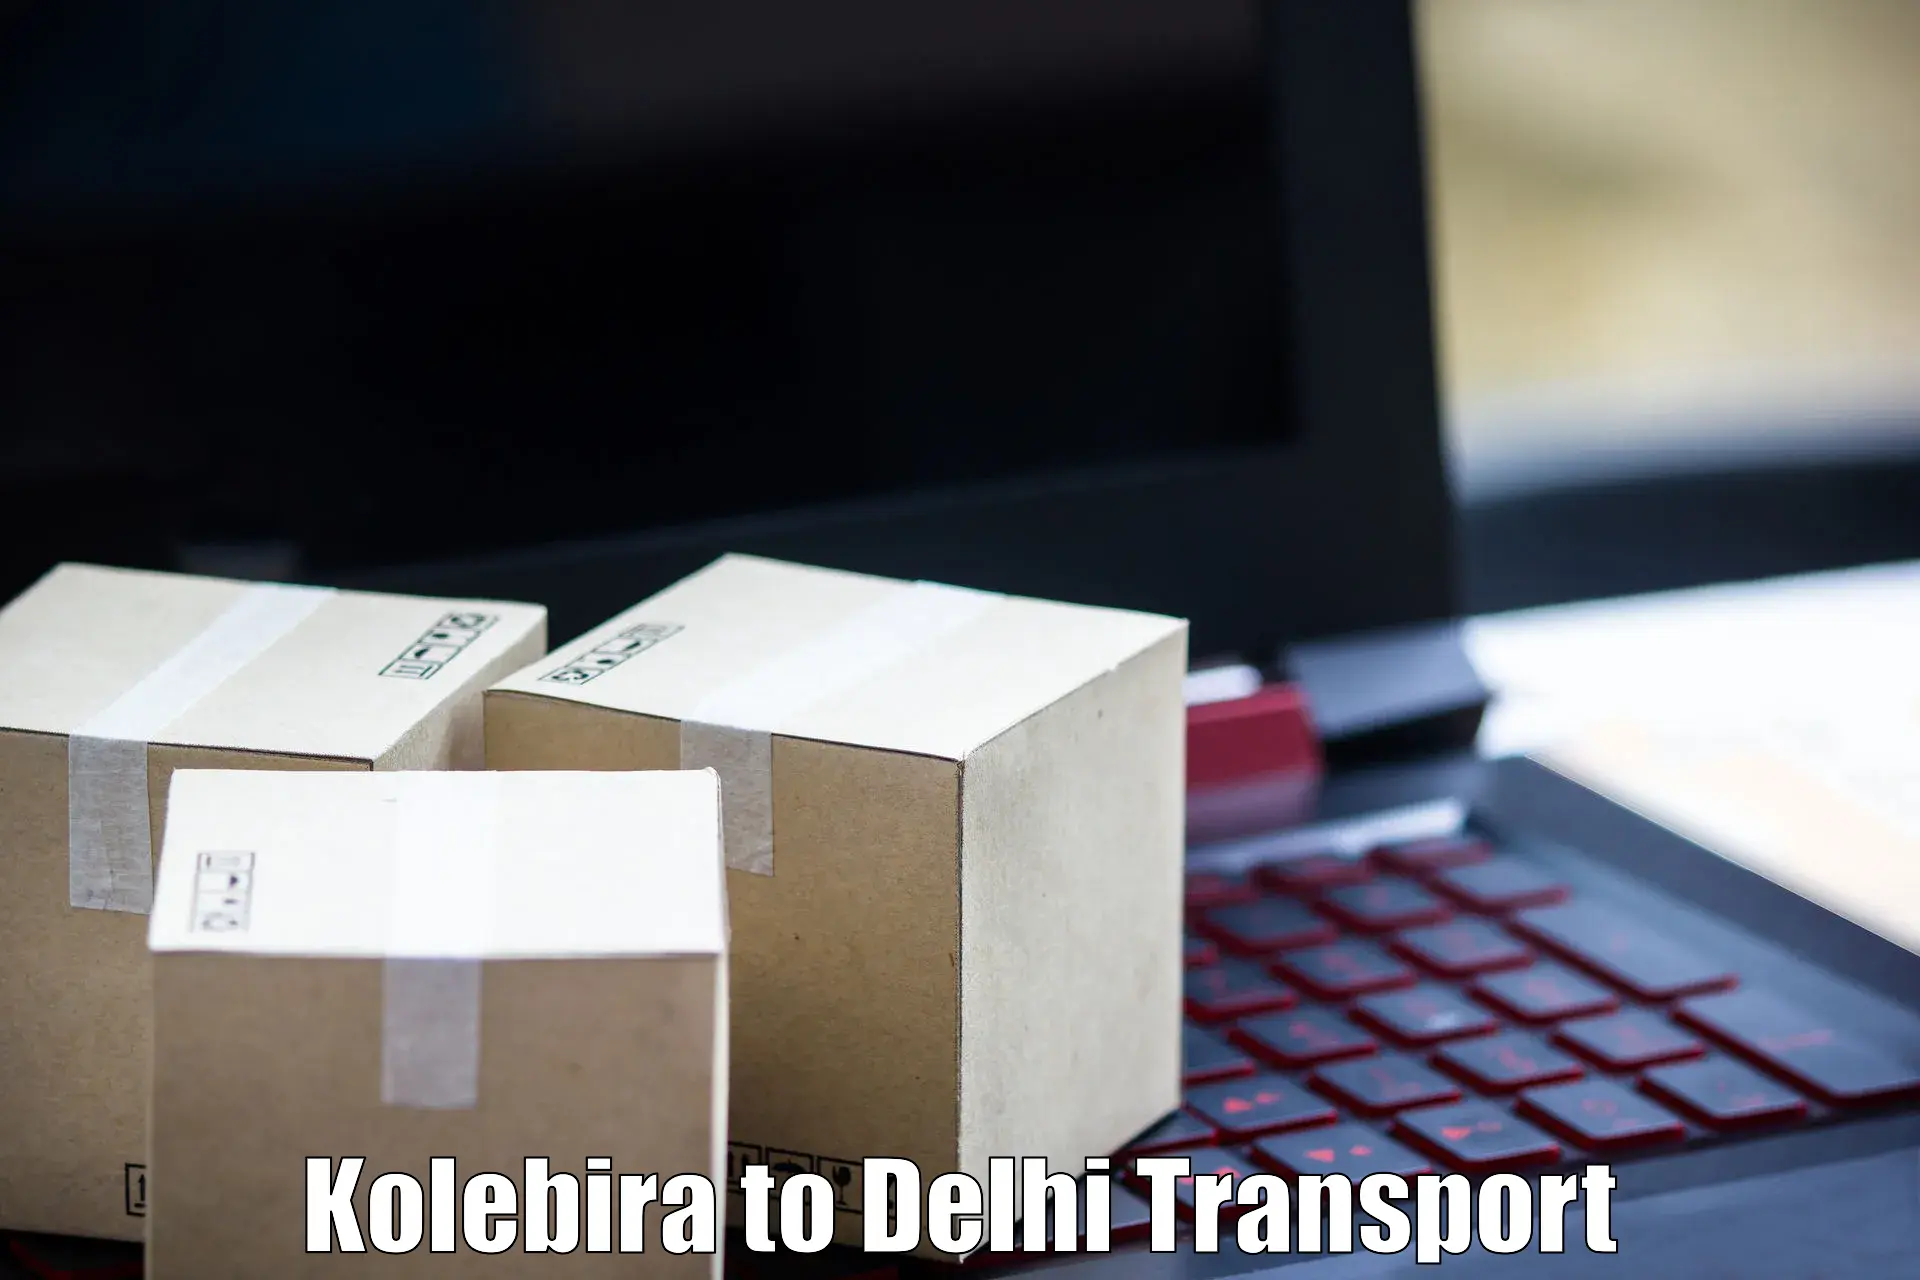 Commercial transport service Kolebira to Delhi